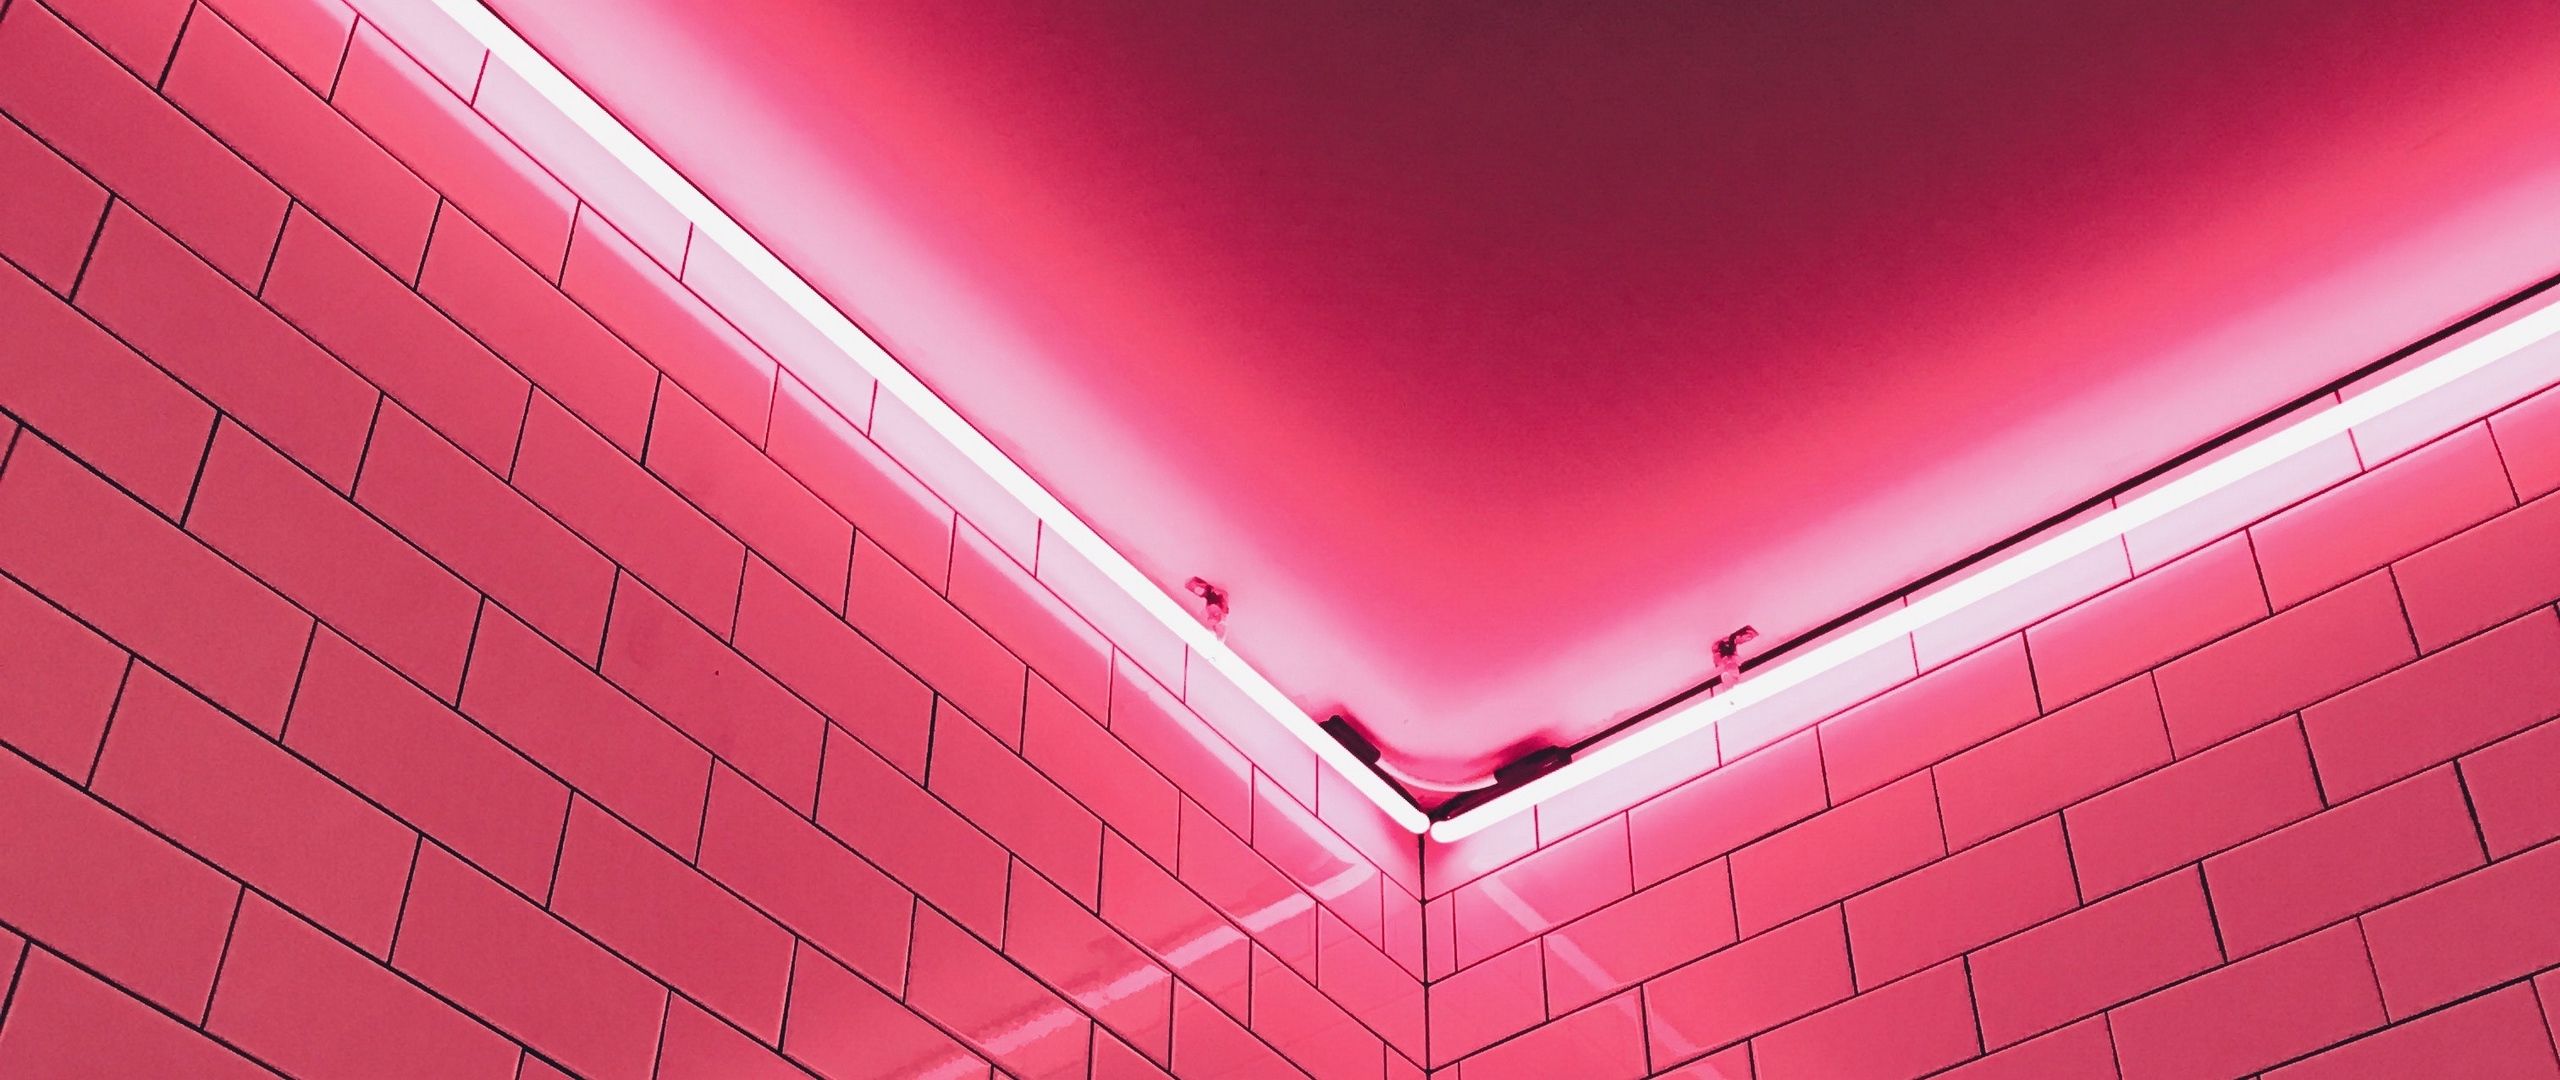 Aesthetic Light Pink Background HD Wallpaper Portal